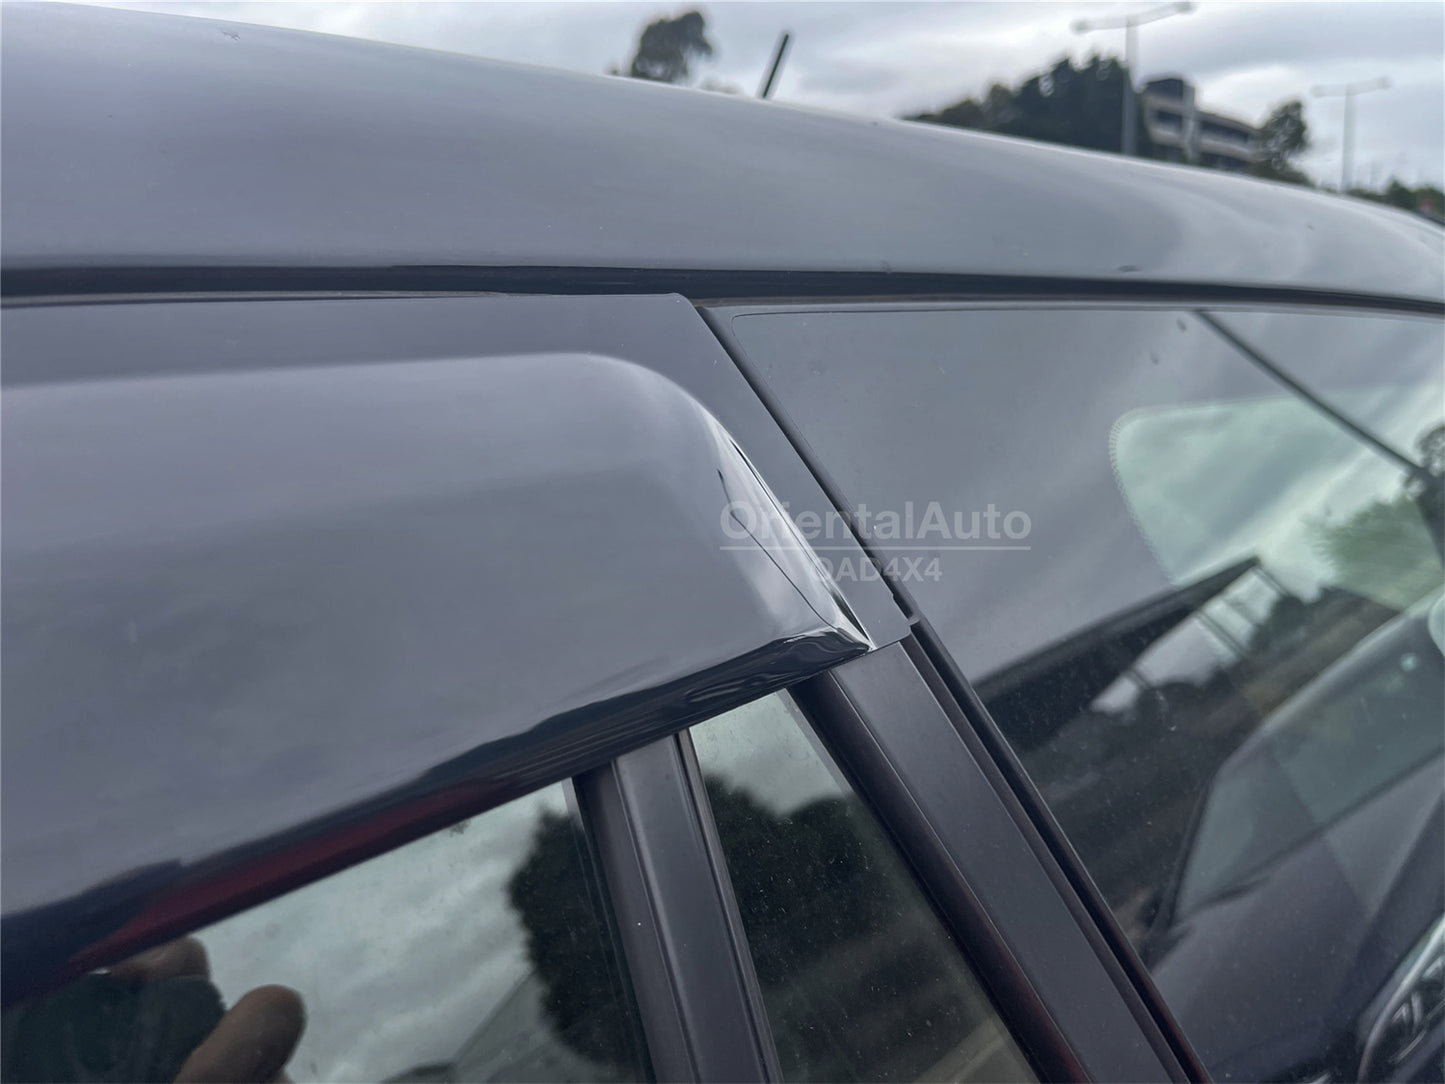 Luxury Weathershields For Toyota RAV4 2006-2012 Weather Shields Window Visor for RAV 4